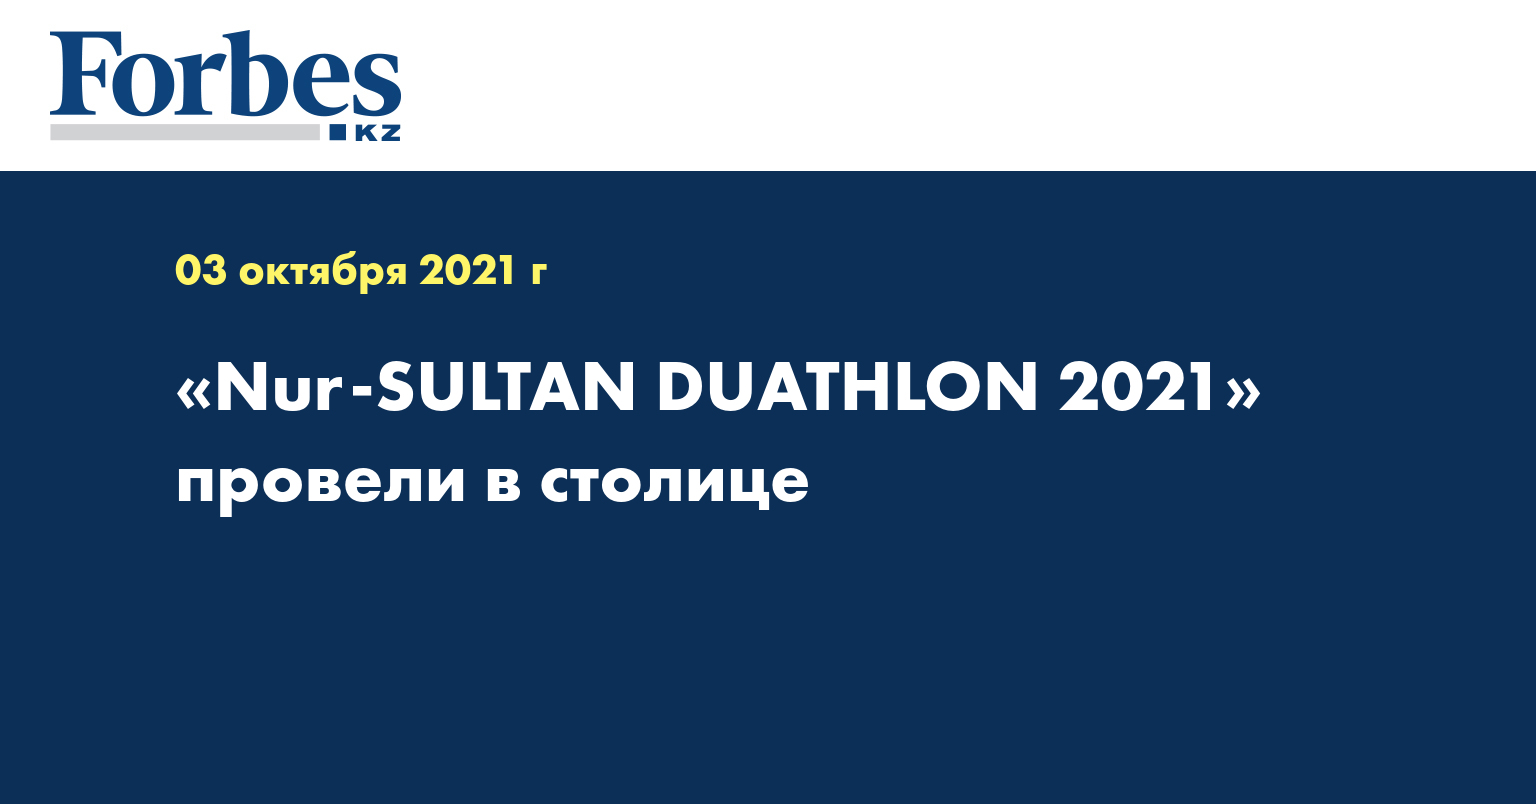 «Nur-SULTAN DUATHLON 2021» провели в столице